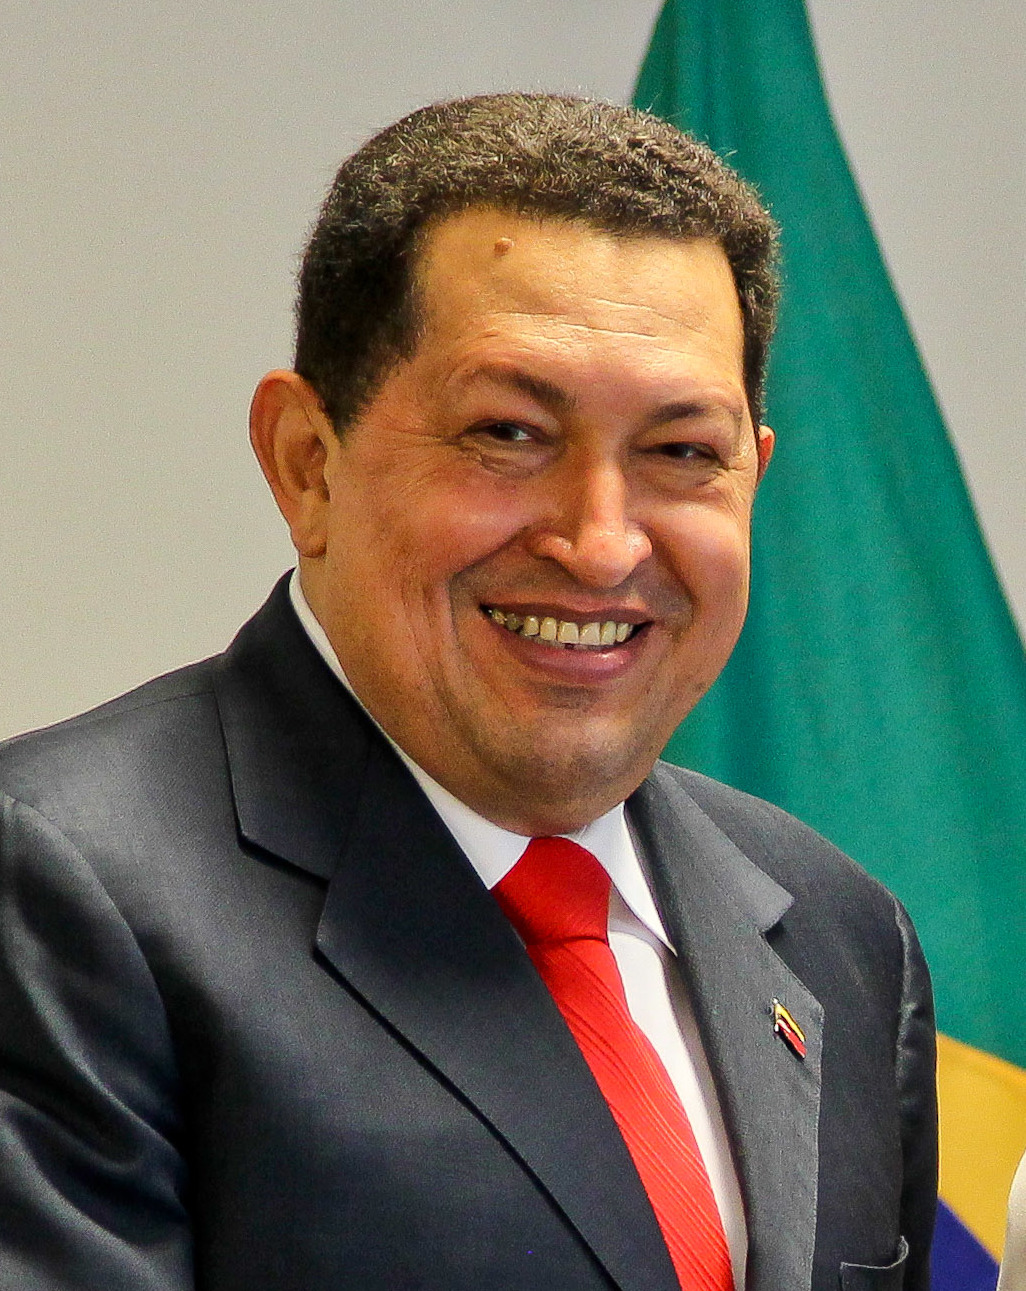 Hugo Chávez pictured in 2011.